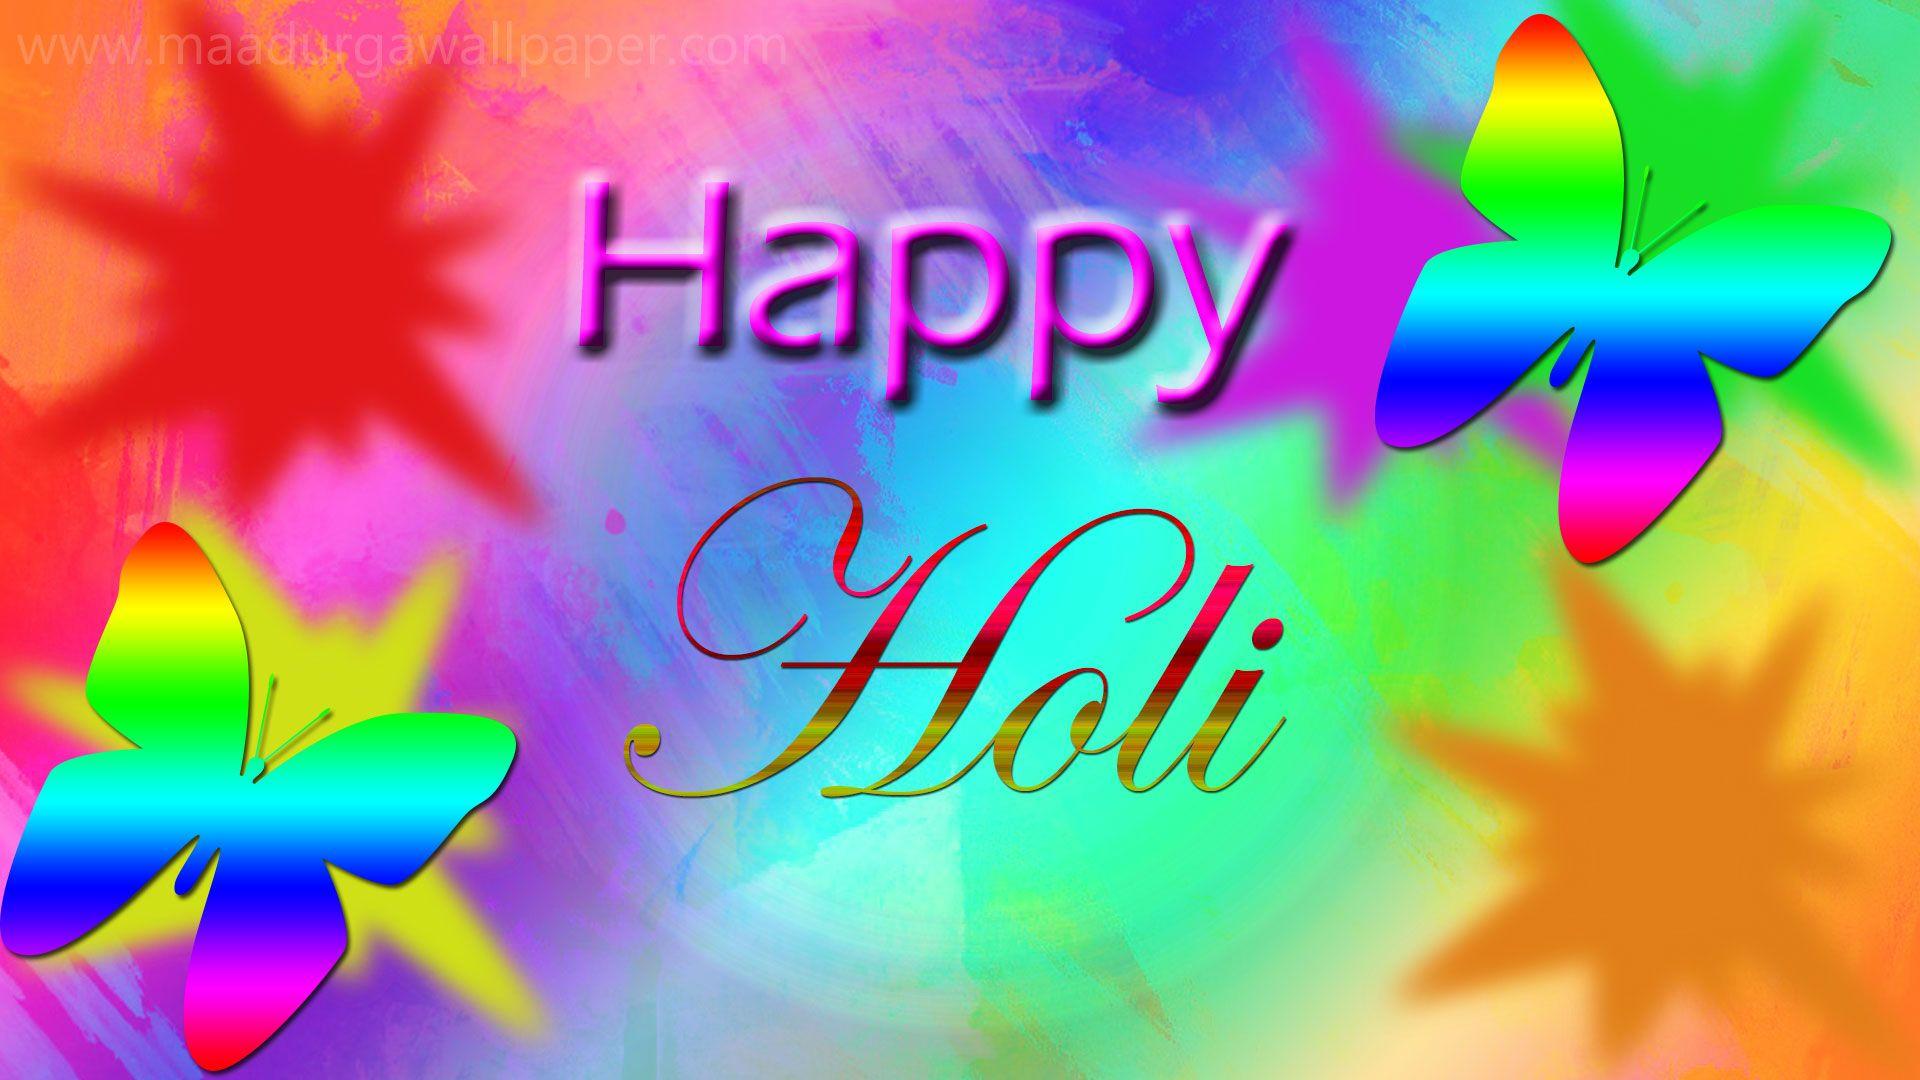 1920x1080 Happy Holi image & HD wallpaper Download